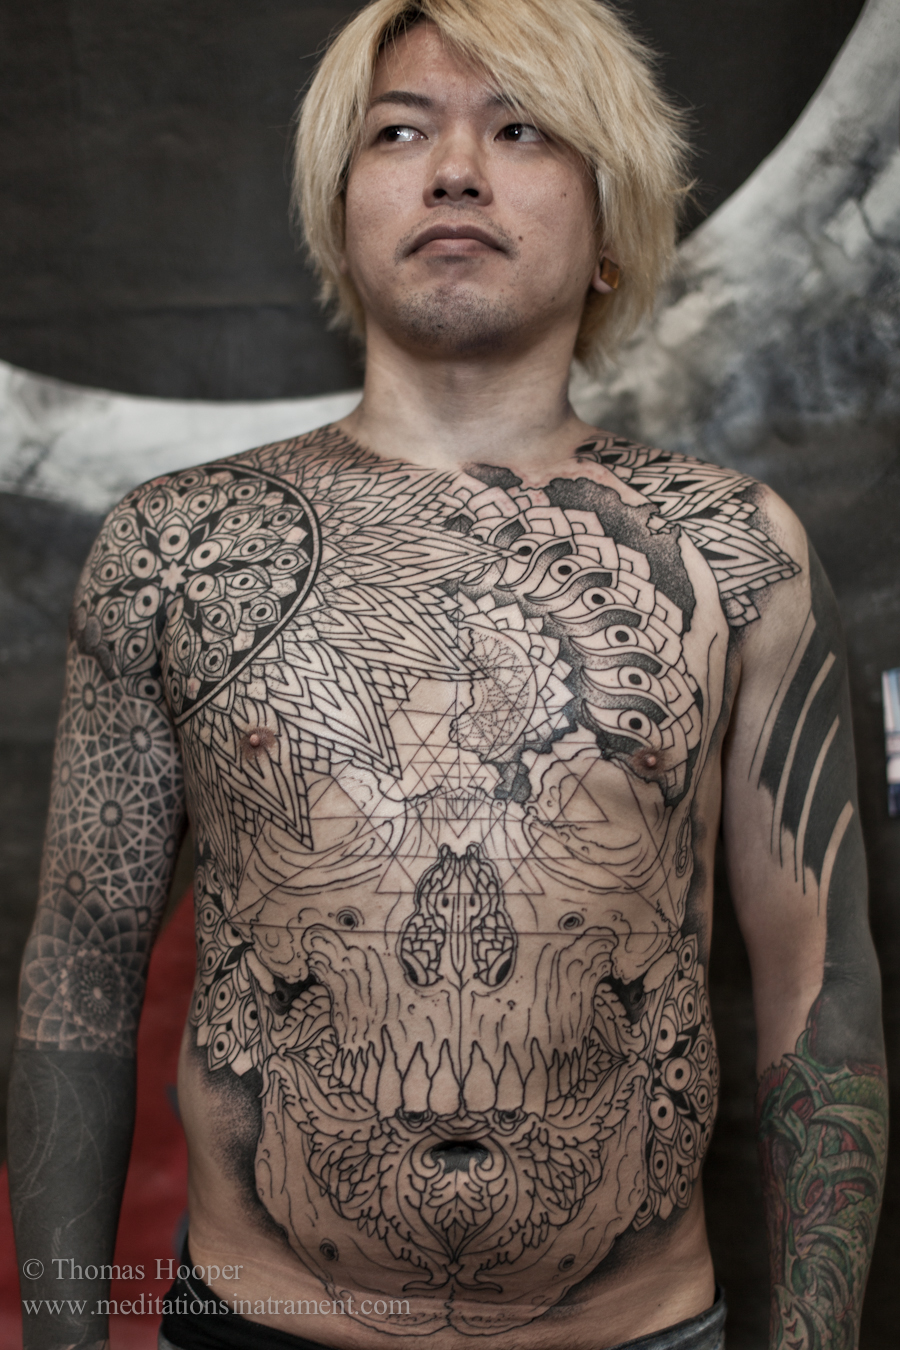 Viewing image 5th tattoo. Koi carp - Ink Trails Tattoo Forum